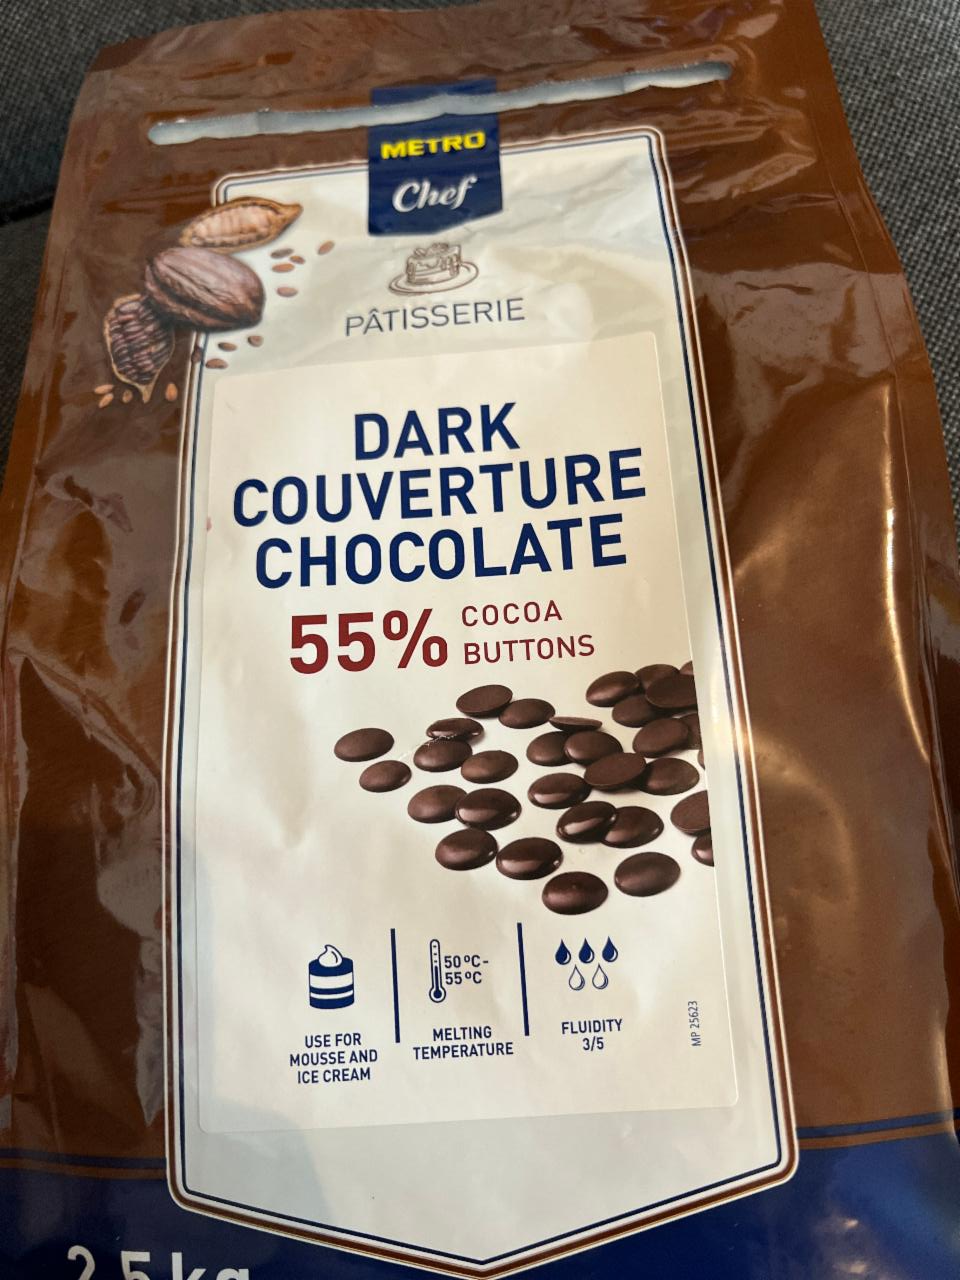 Fotografie - Dark Couverture Chocolate 55% Cocoa Buttons Metro Chef